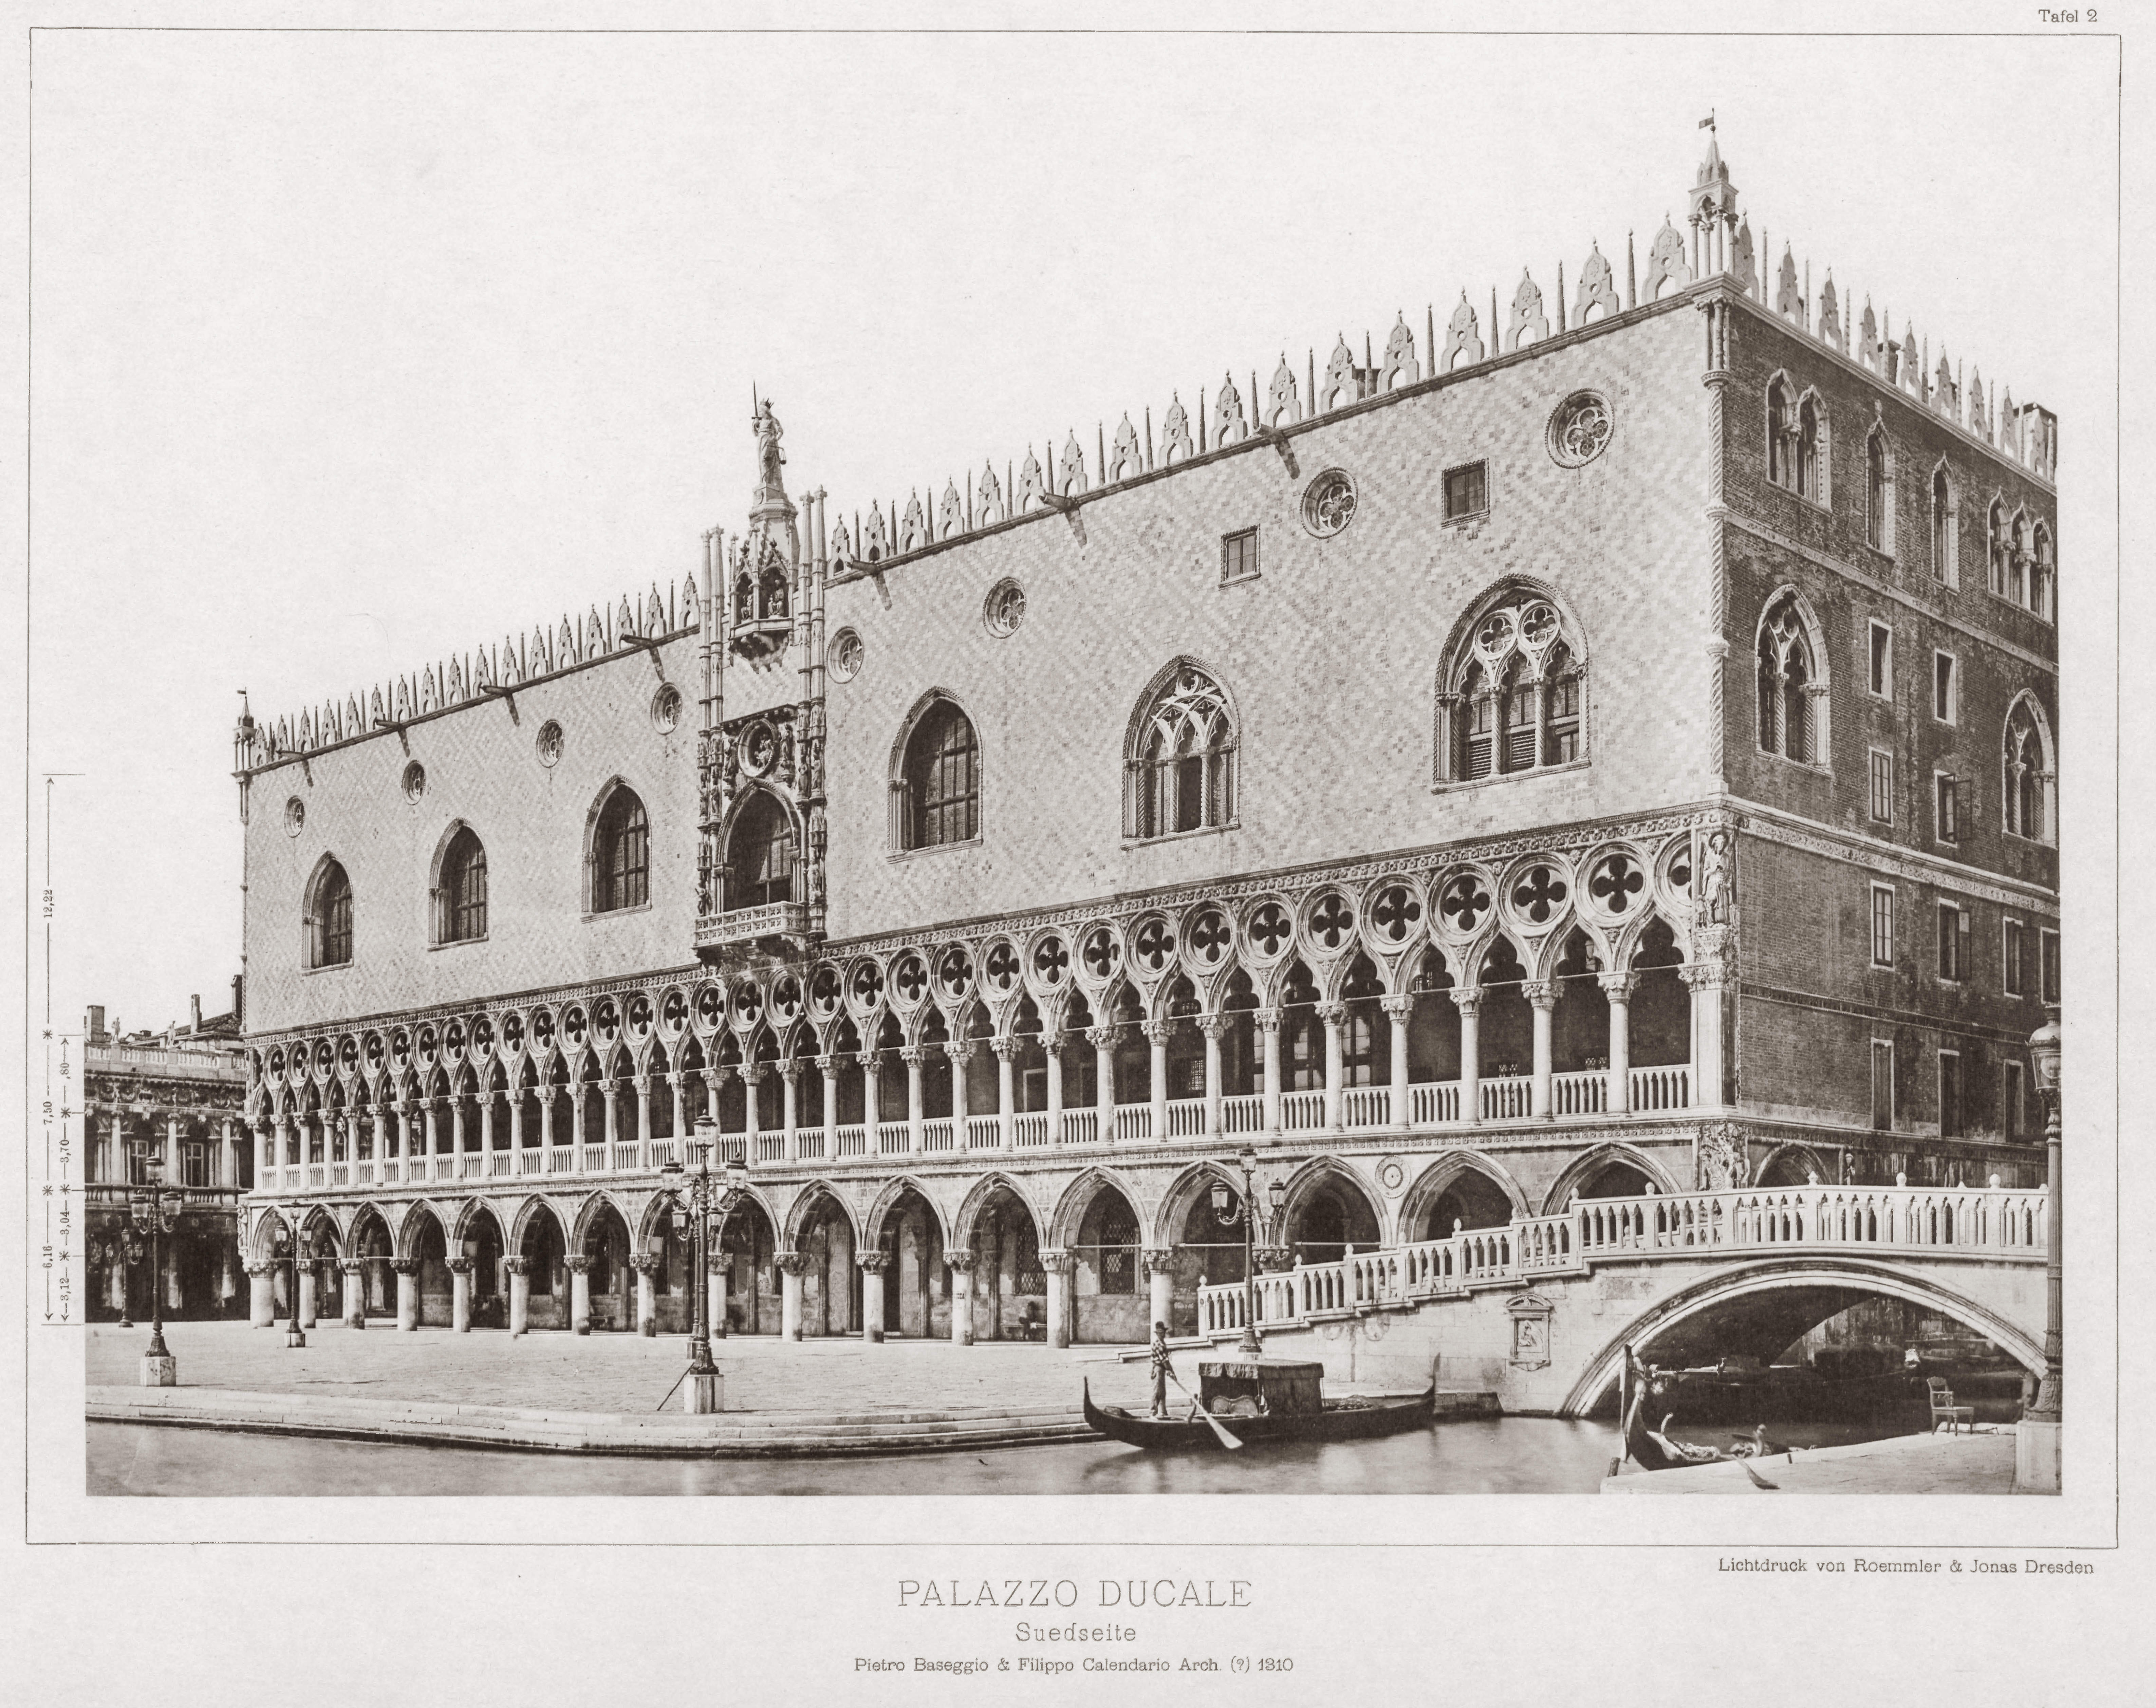 Pietro Baseggio, Architect of the Ducal Palace in Venice, Italy